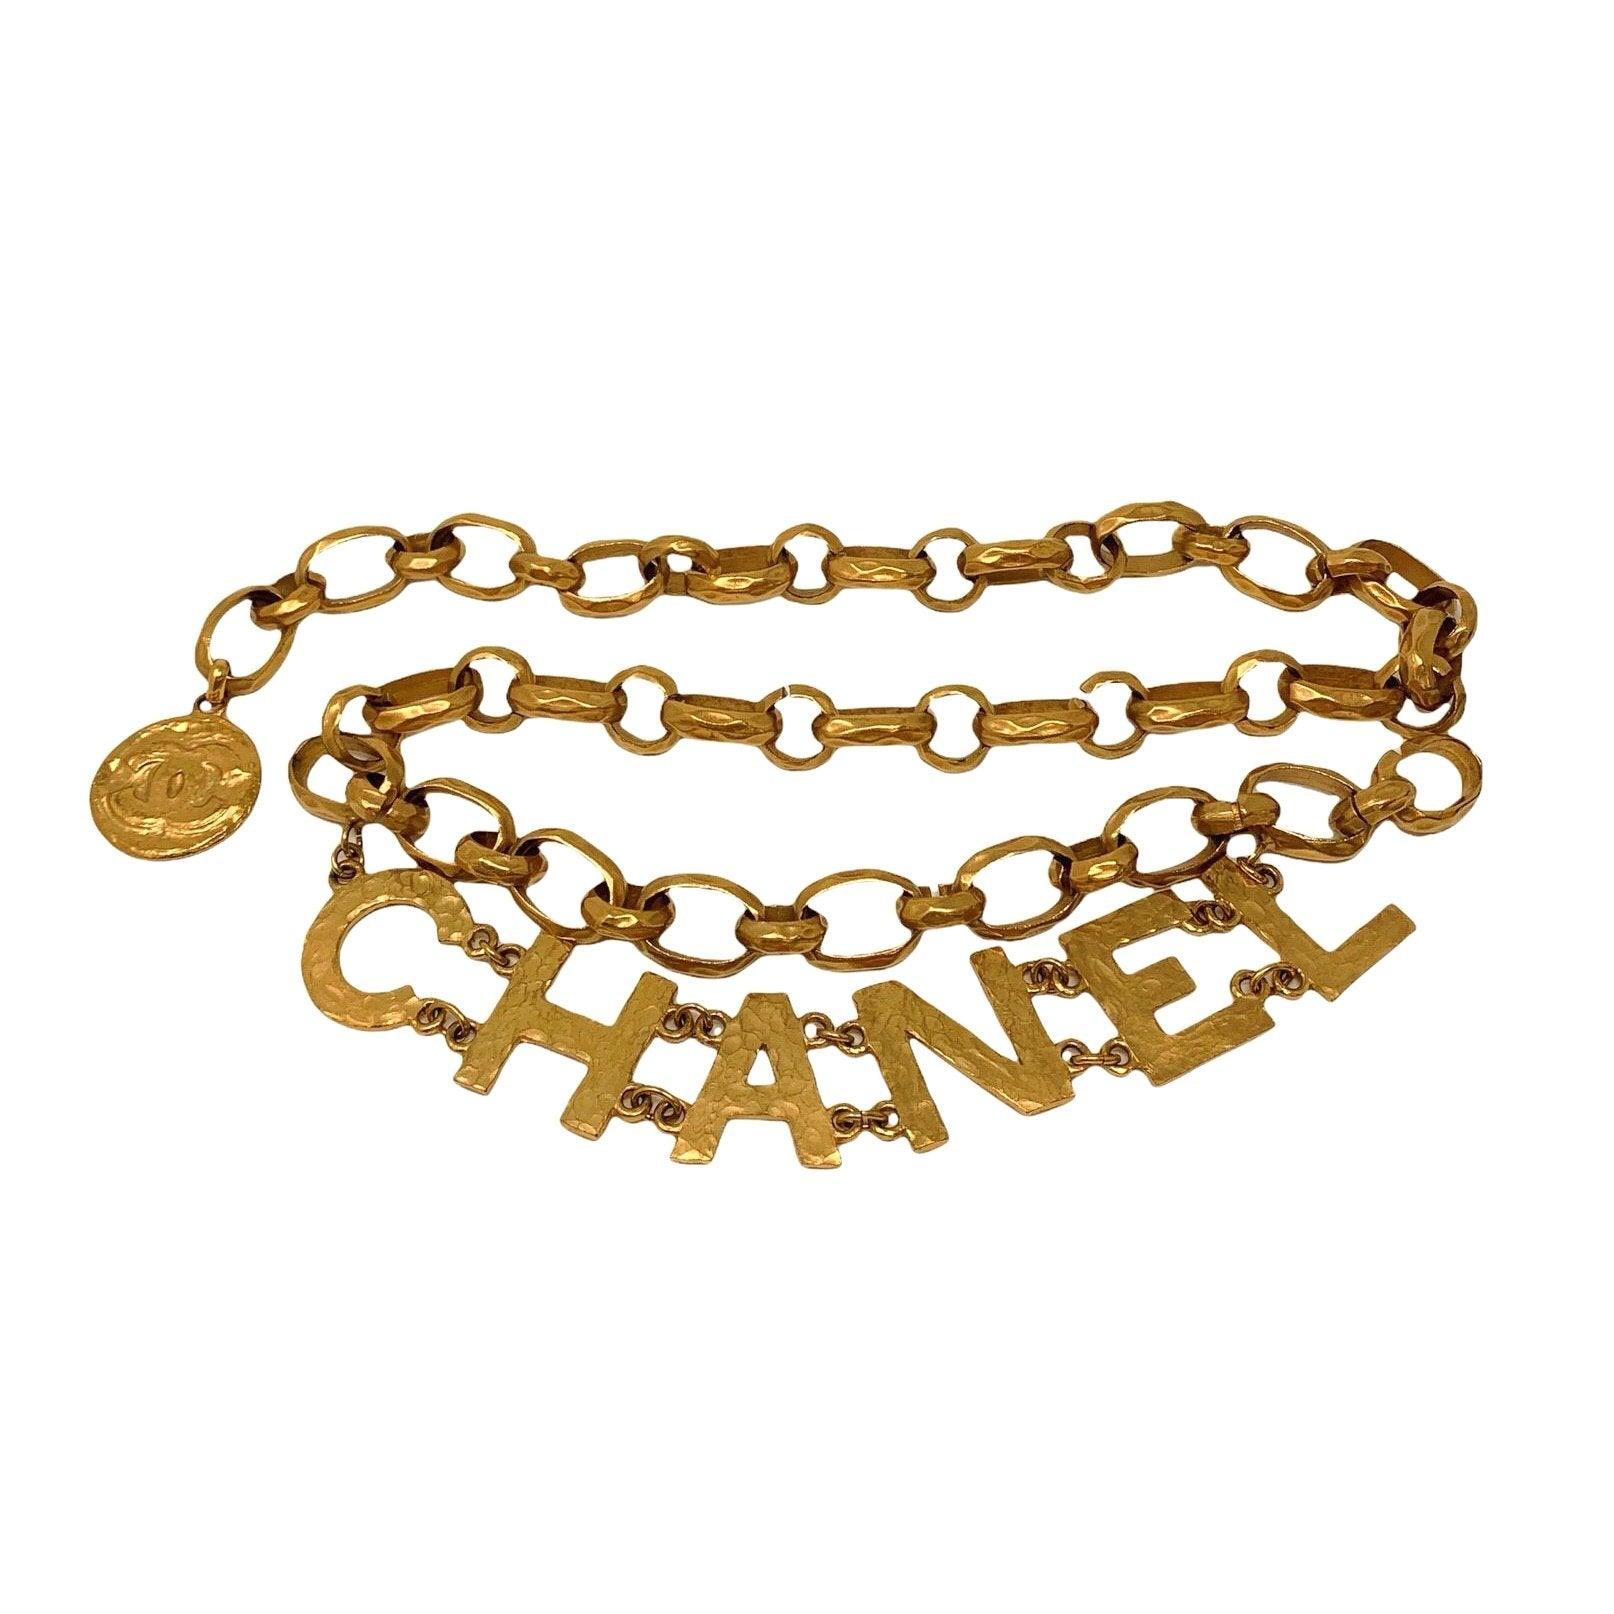 Chanel Gold Logo Chain Belt - Accessories